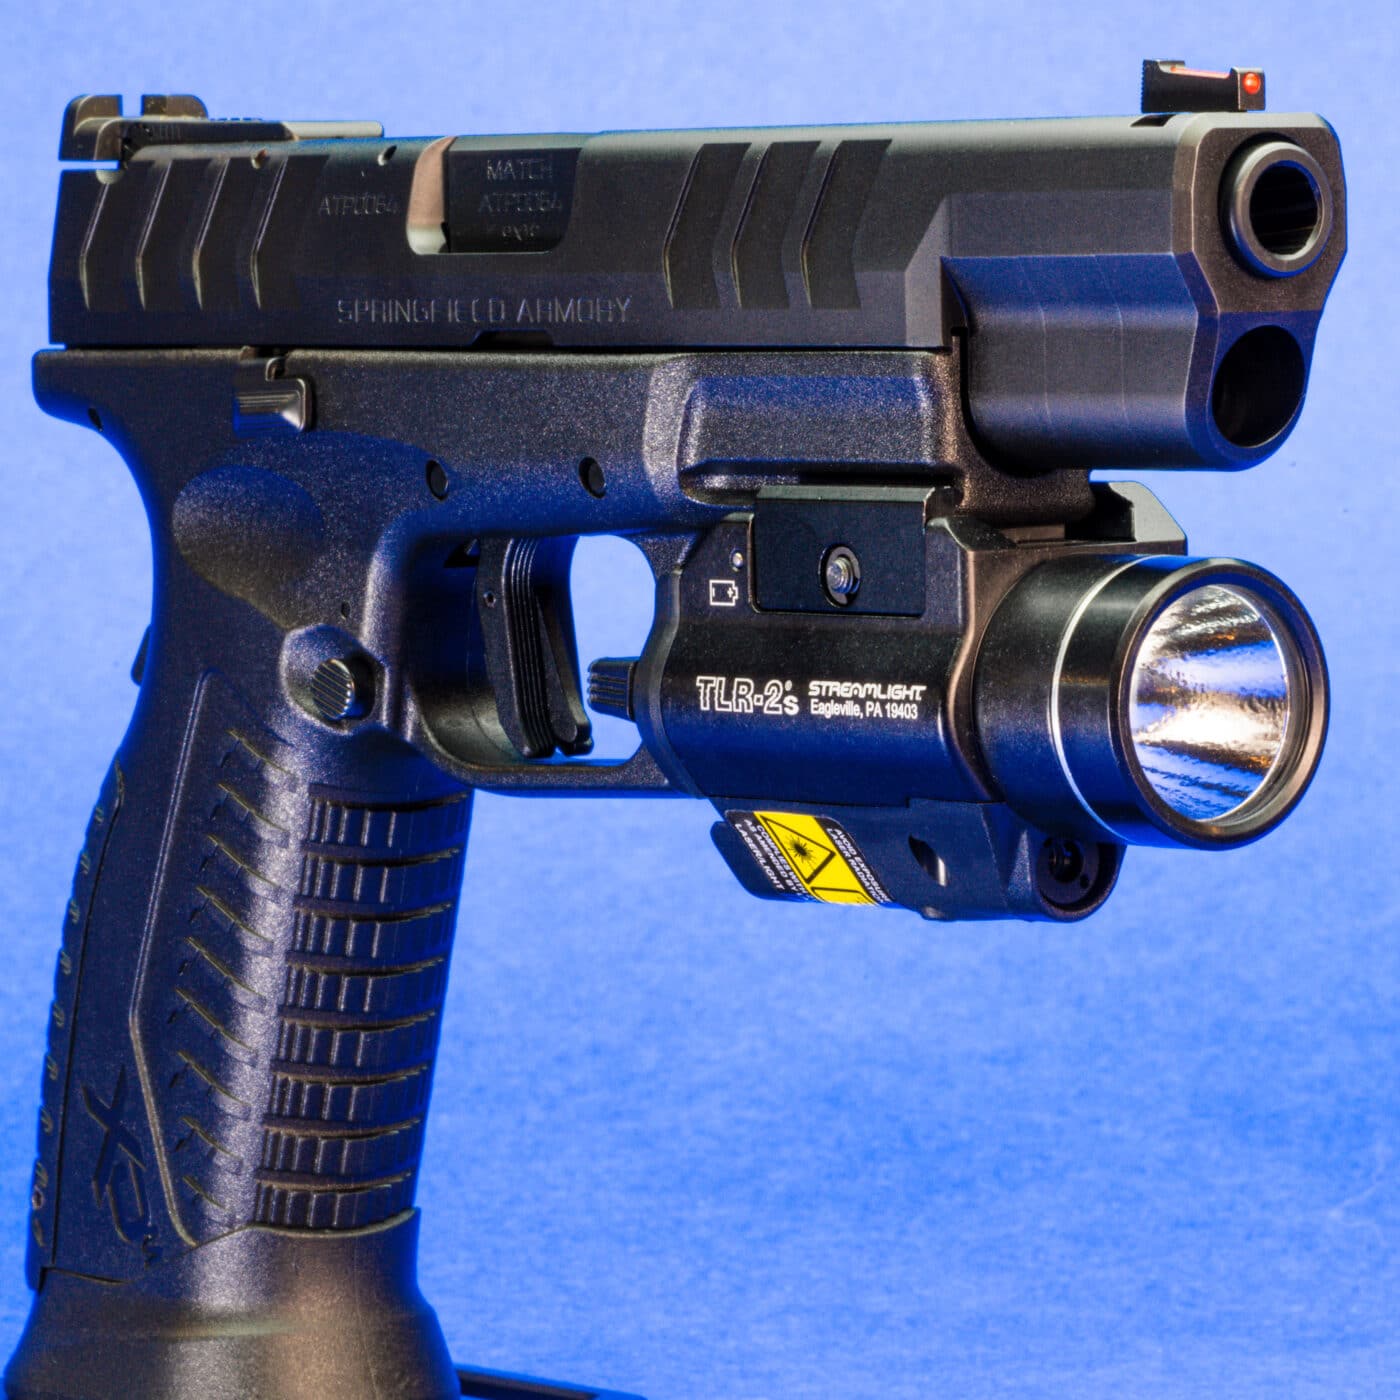 Streamlight light and laser combination on a Springfield Armory polymer pistol